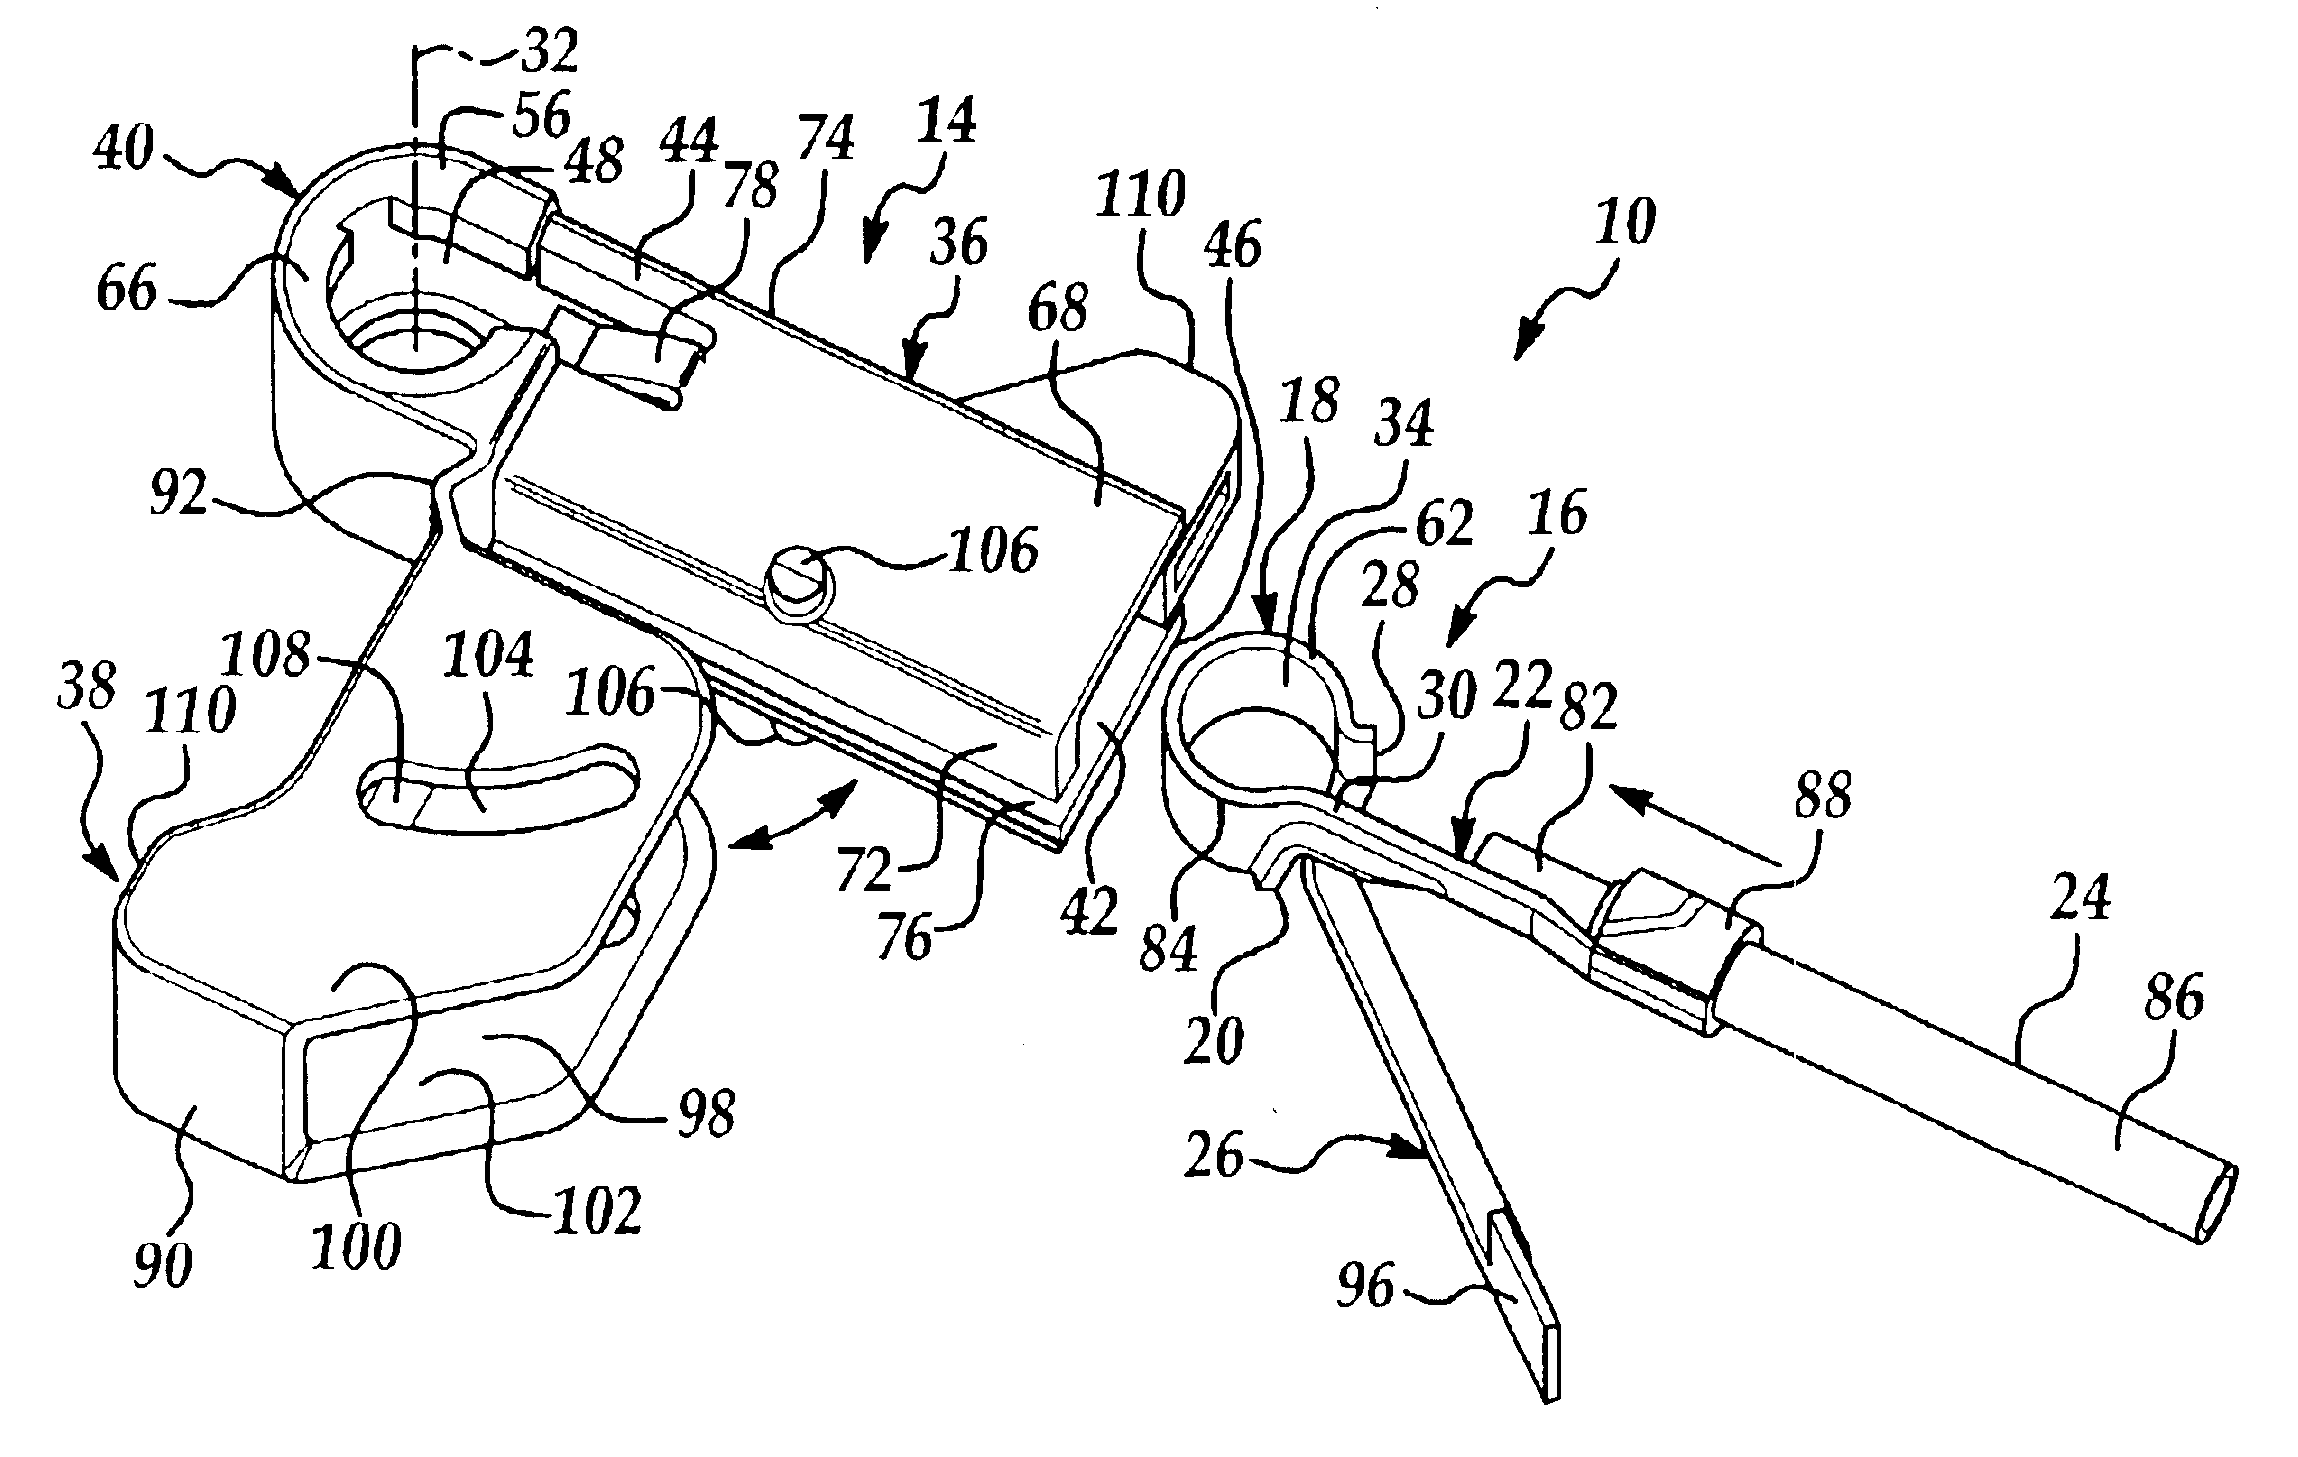 Electrical clip connector comprising expandable barrel segment